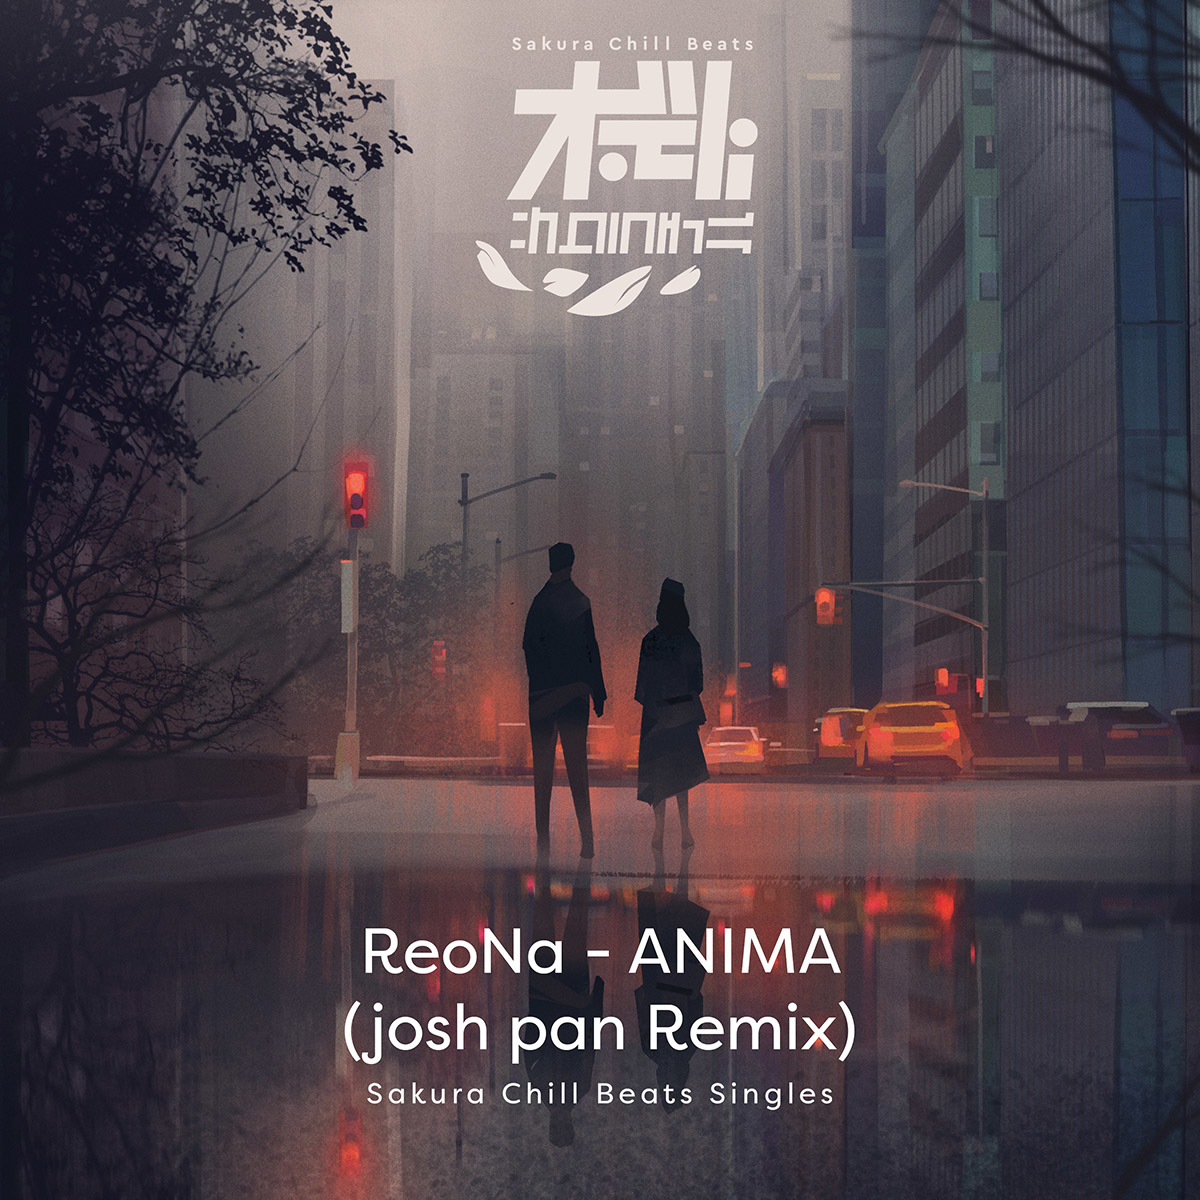 「ANIMA (josh pan Remix) - Sakura Chill Beats Singles」配信ジャケット (C)2020 川原 礫/KADOKAWA/SAO-P Project